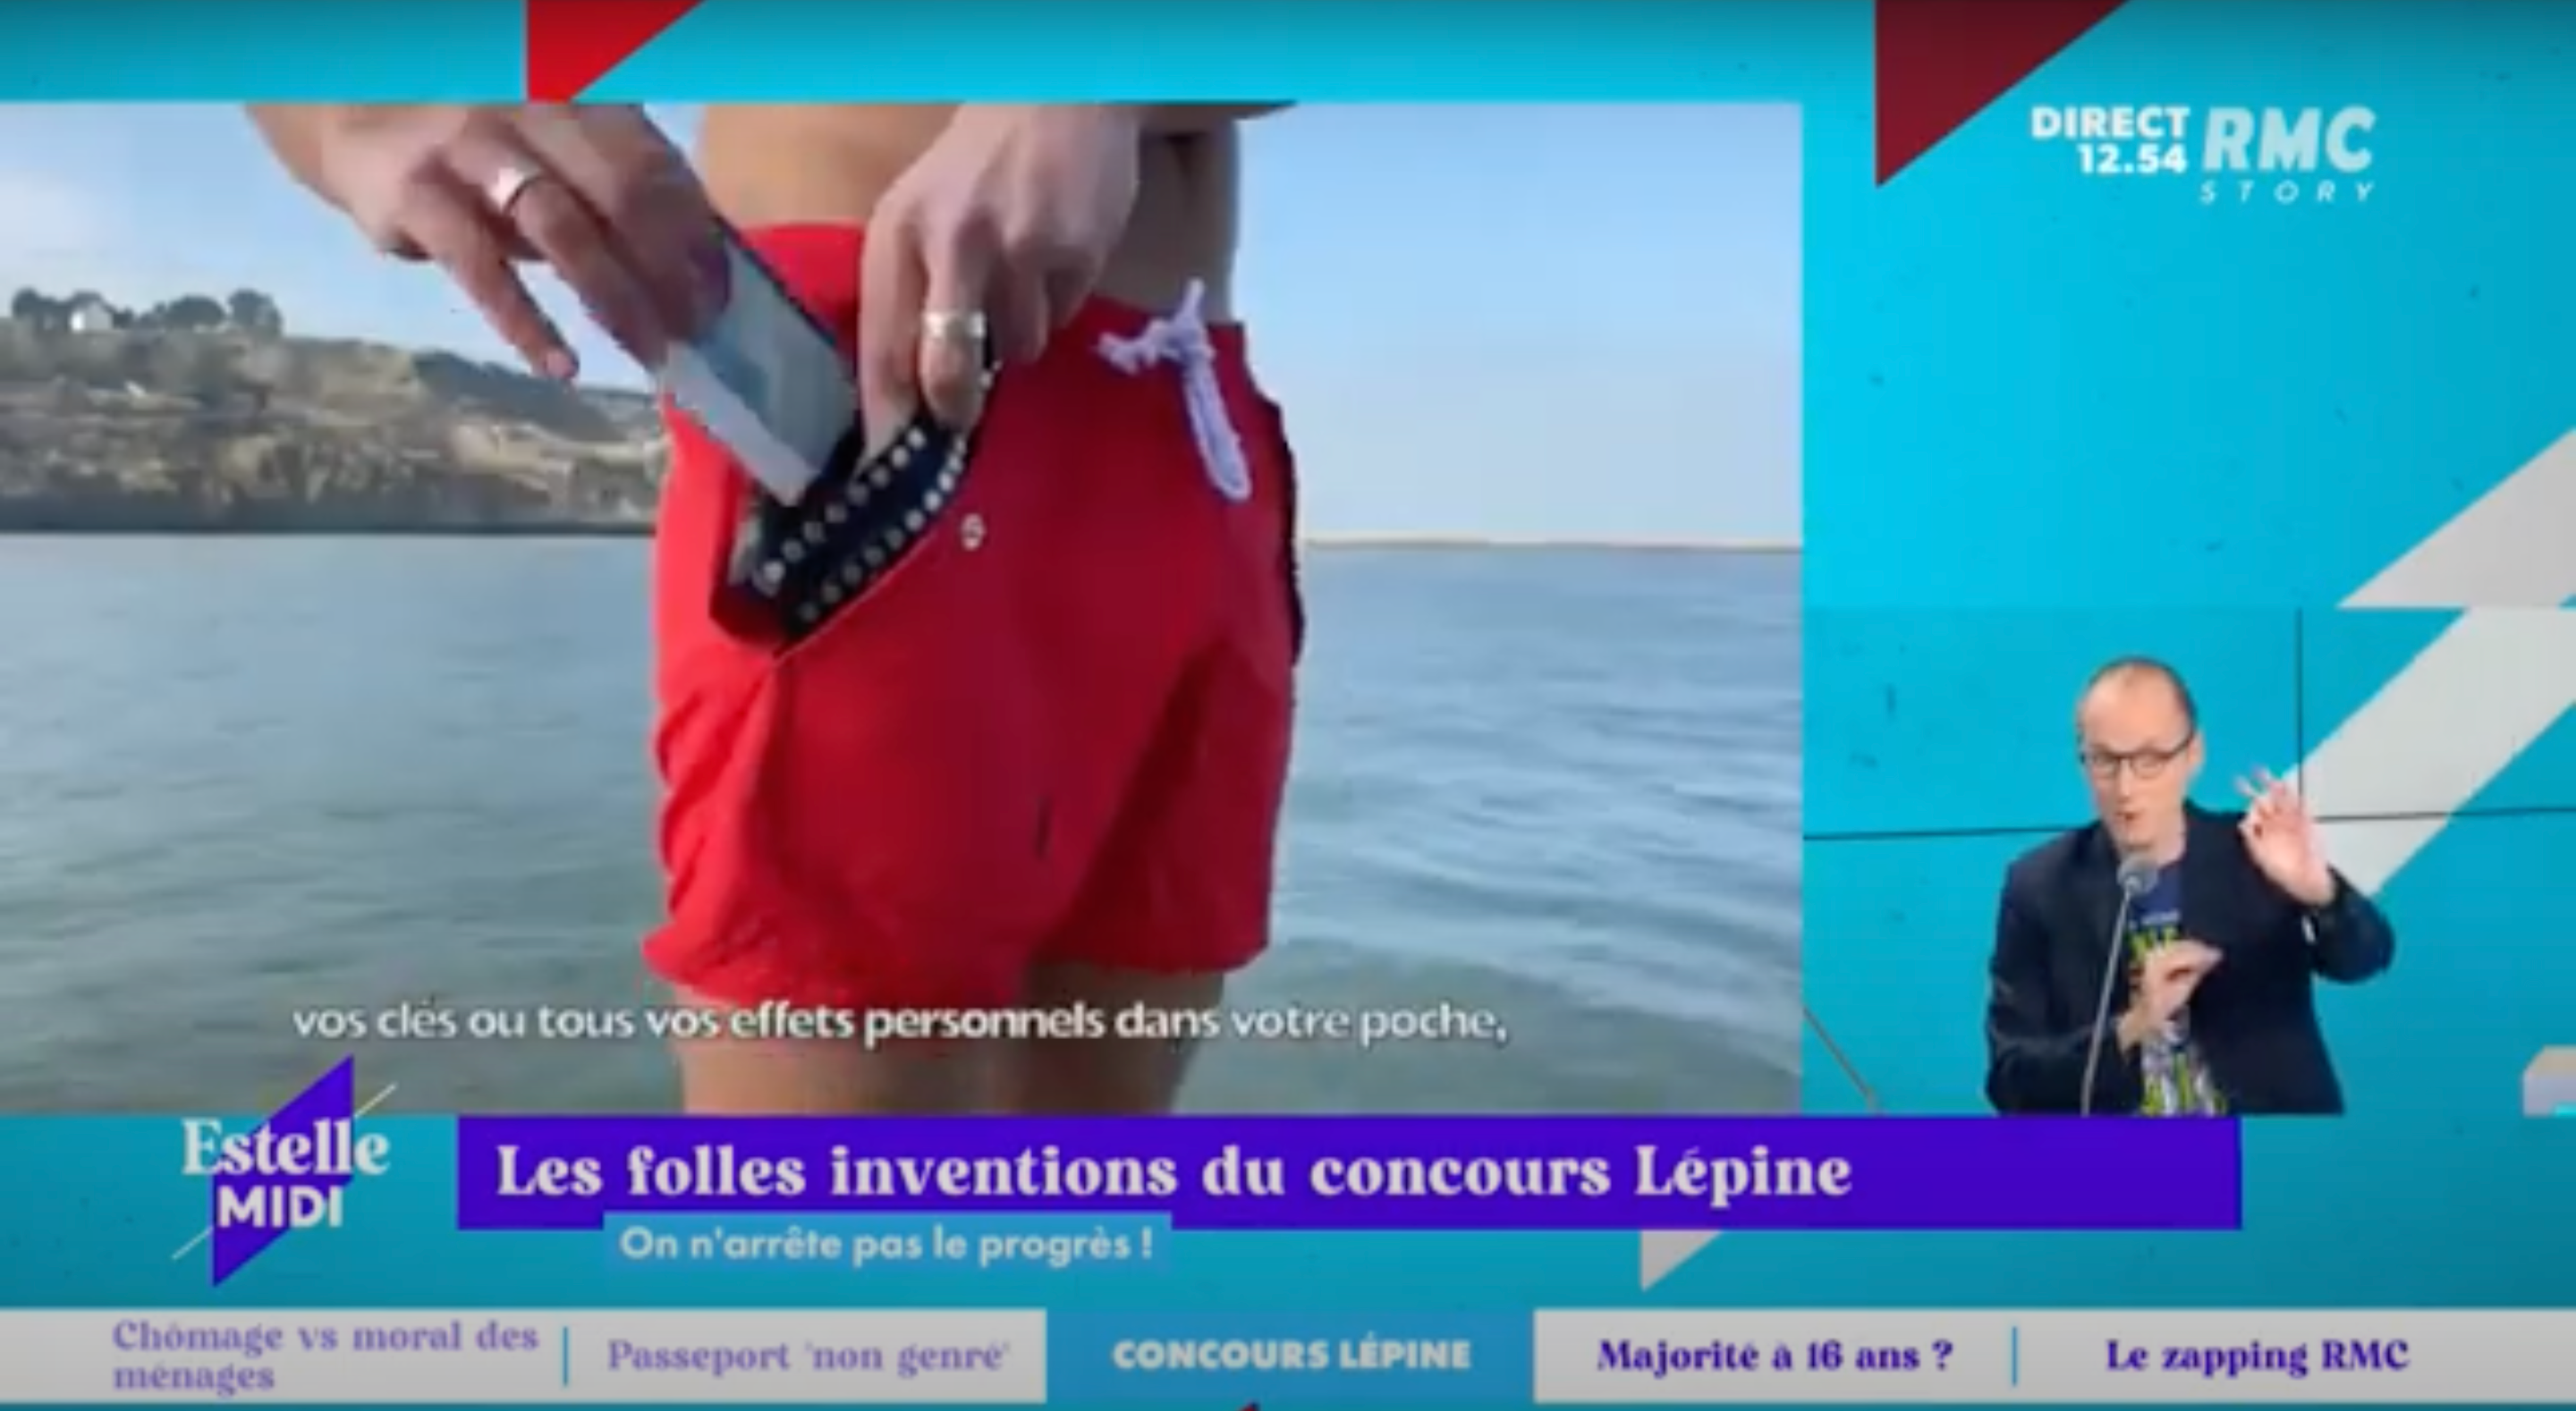 Video laden: Estelle Midi sur RMC